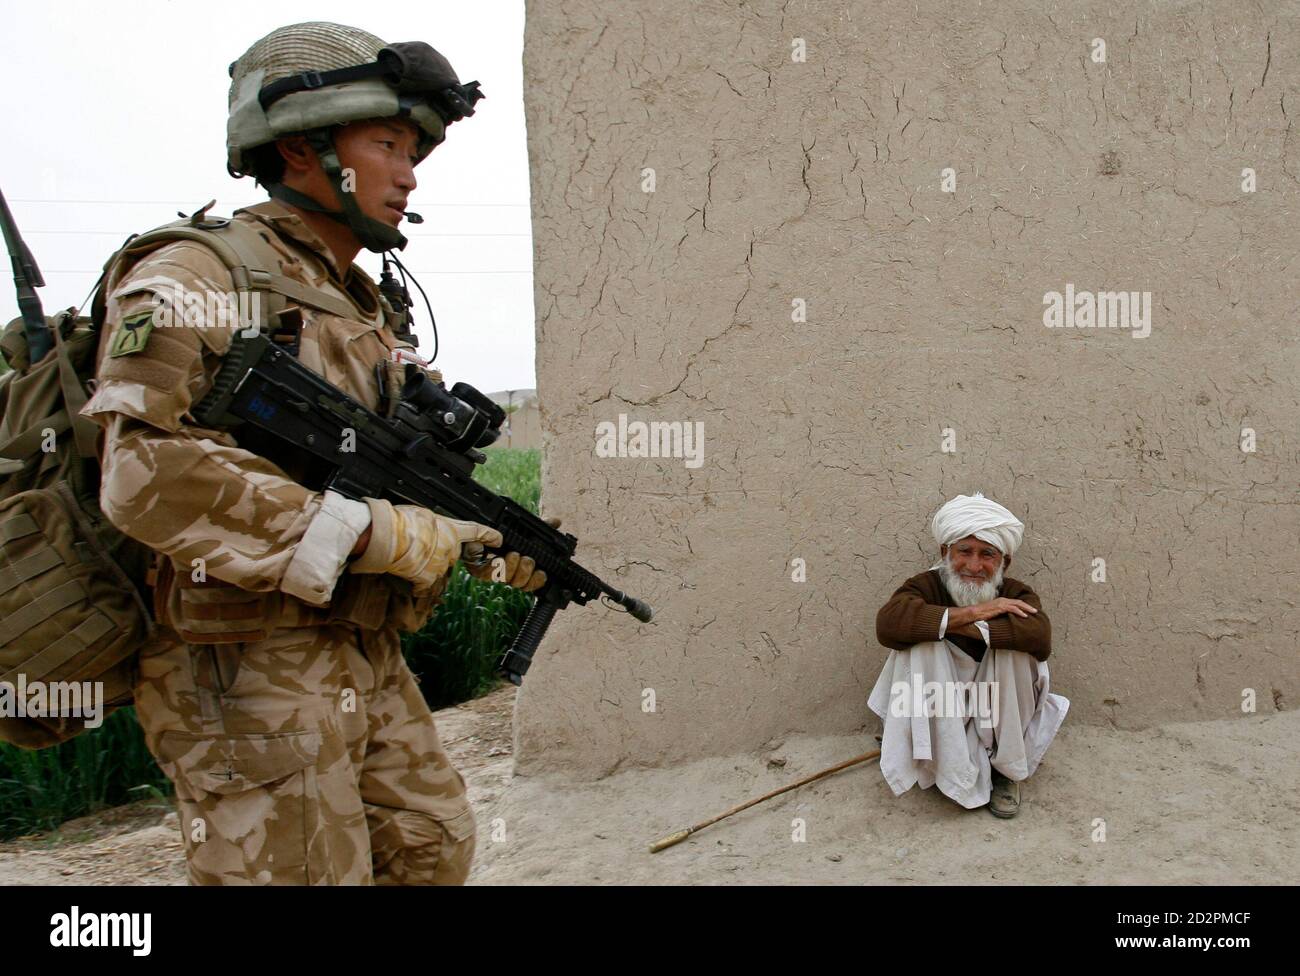 A Gurkha soldier of the British army patrols in Musa Qala, in